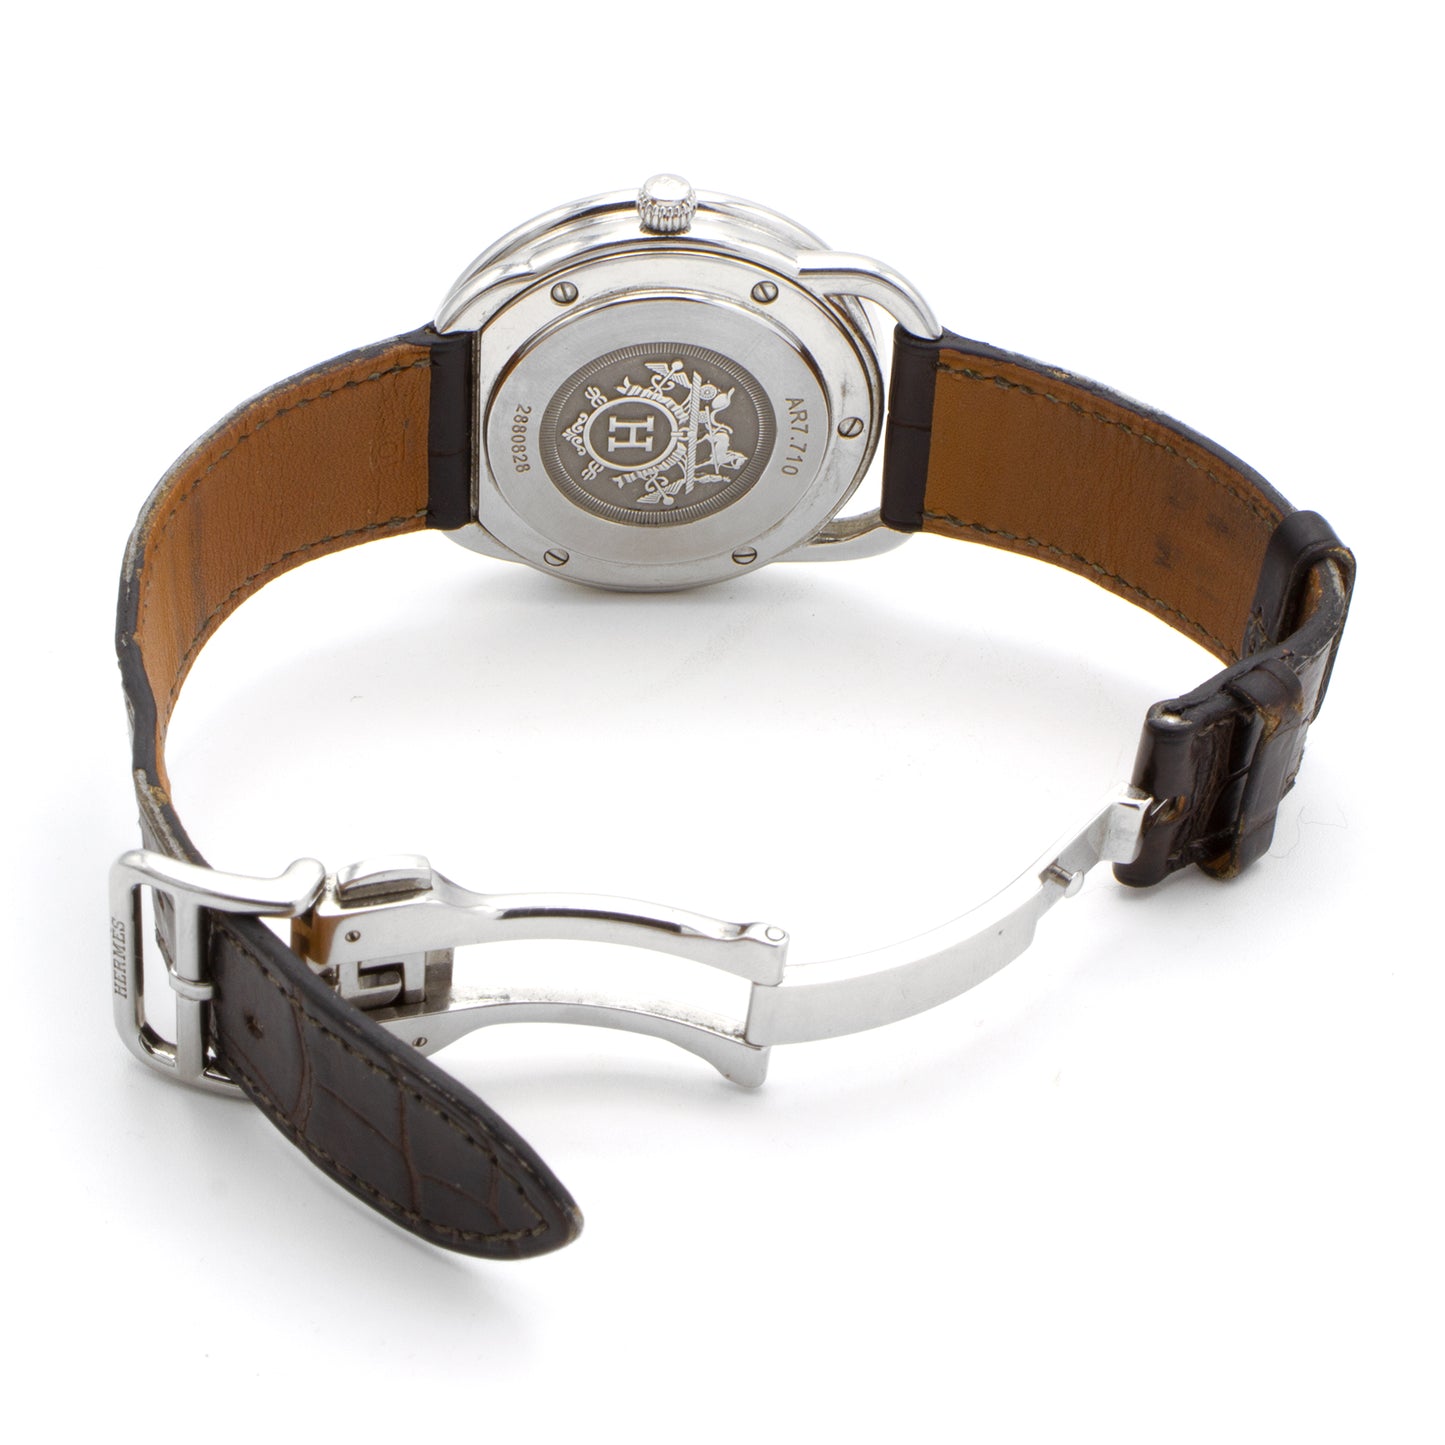 Hermès Arceau AR7.710 watch